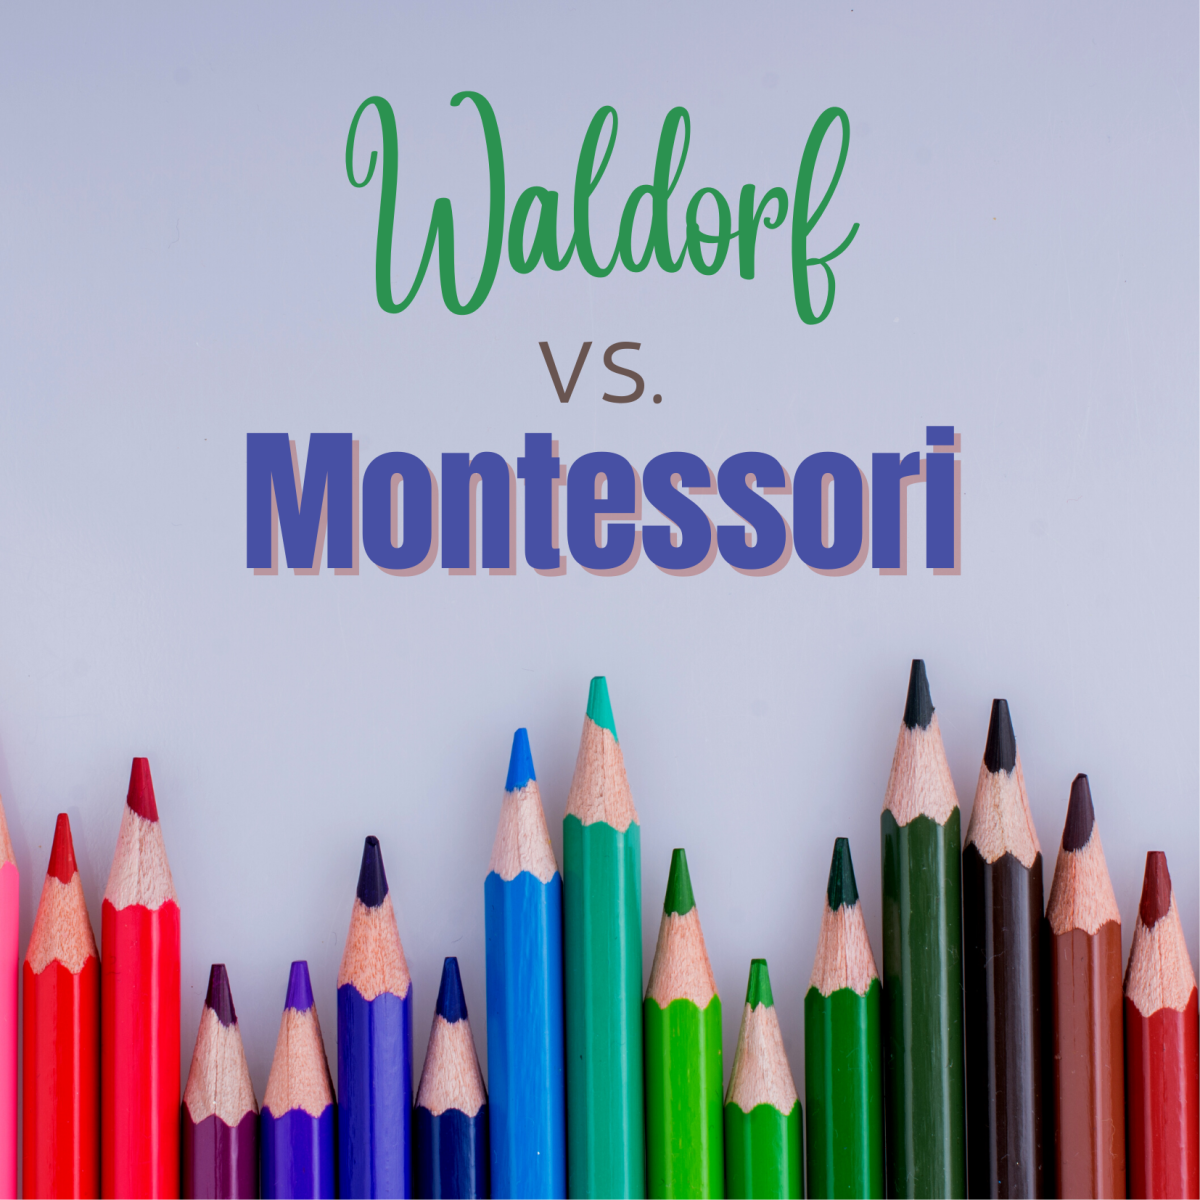 Waldorf or Montessori?